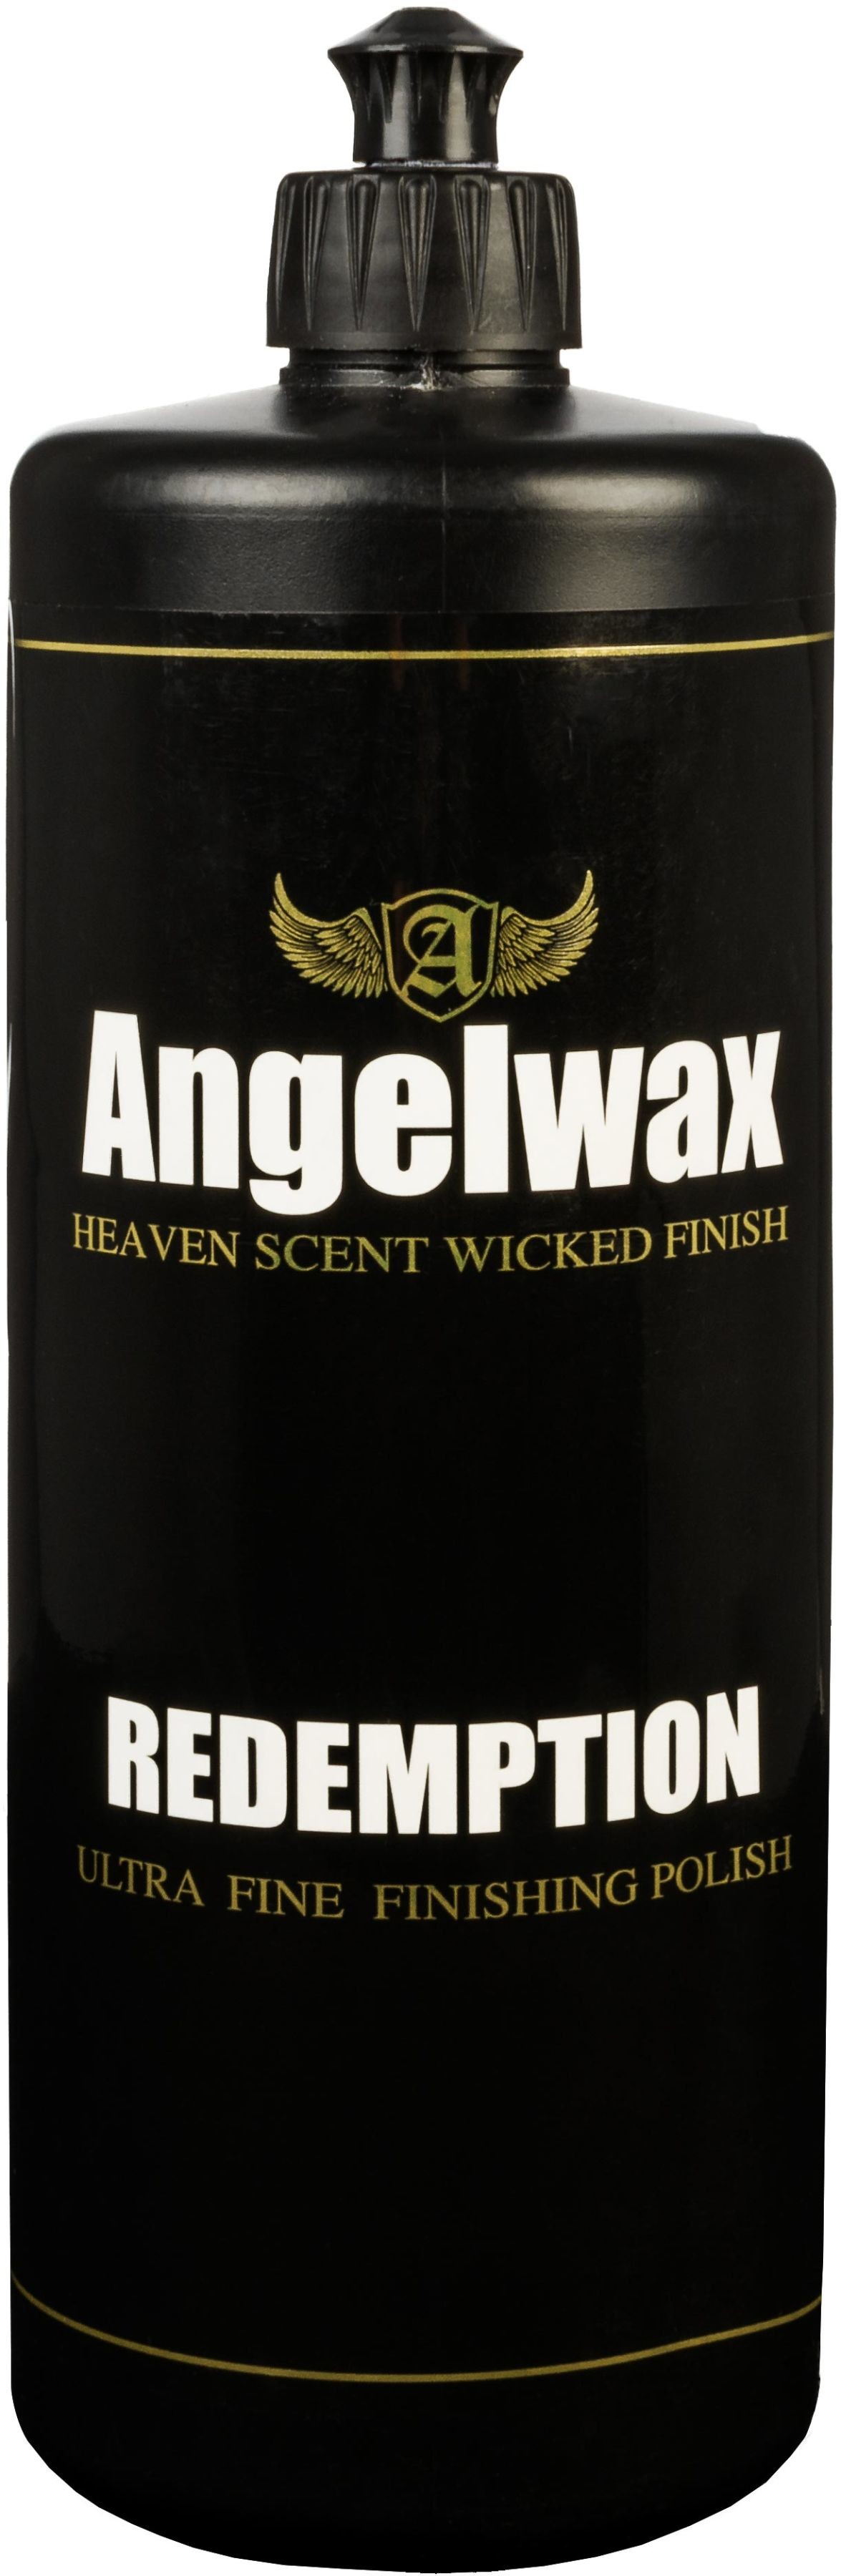 AngelWax Redemption delikatna finishowa pasta polerska 1000ml ANG000103